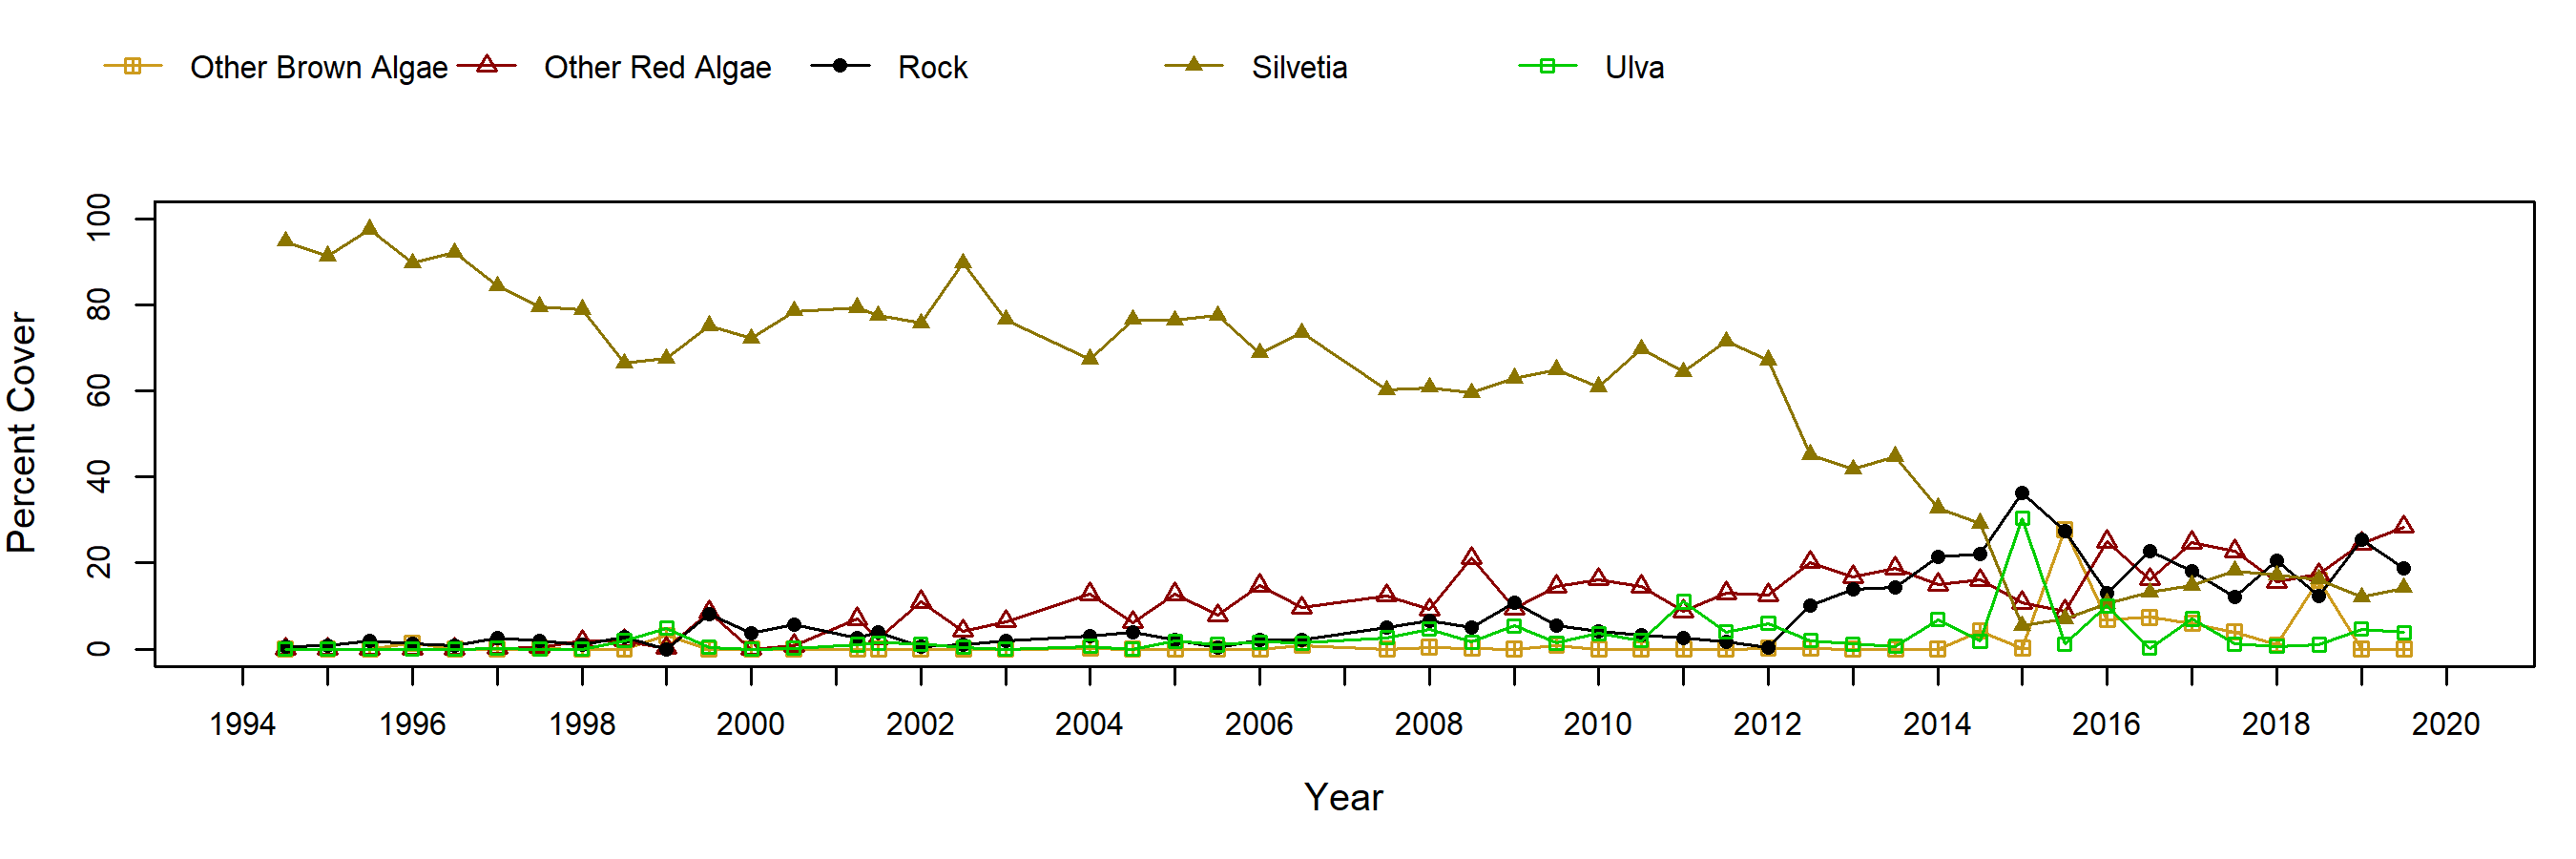 Bird Rock Silvetia trend plot